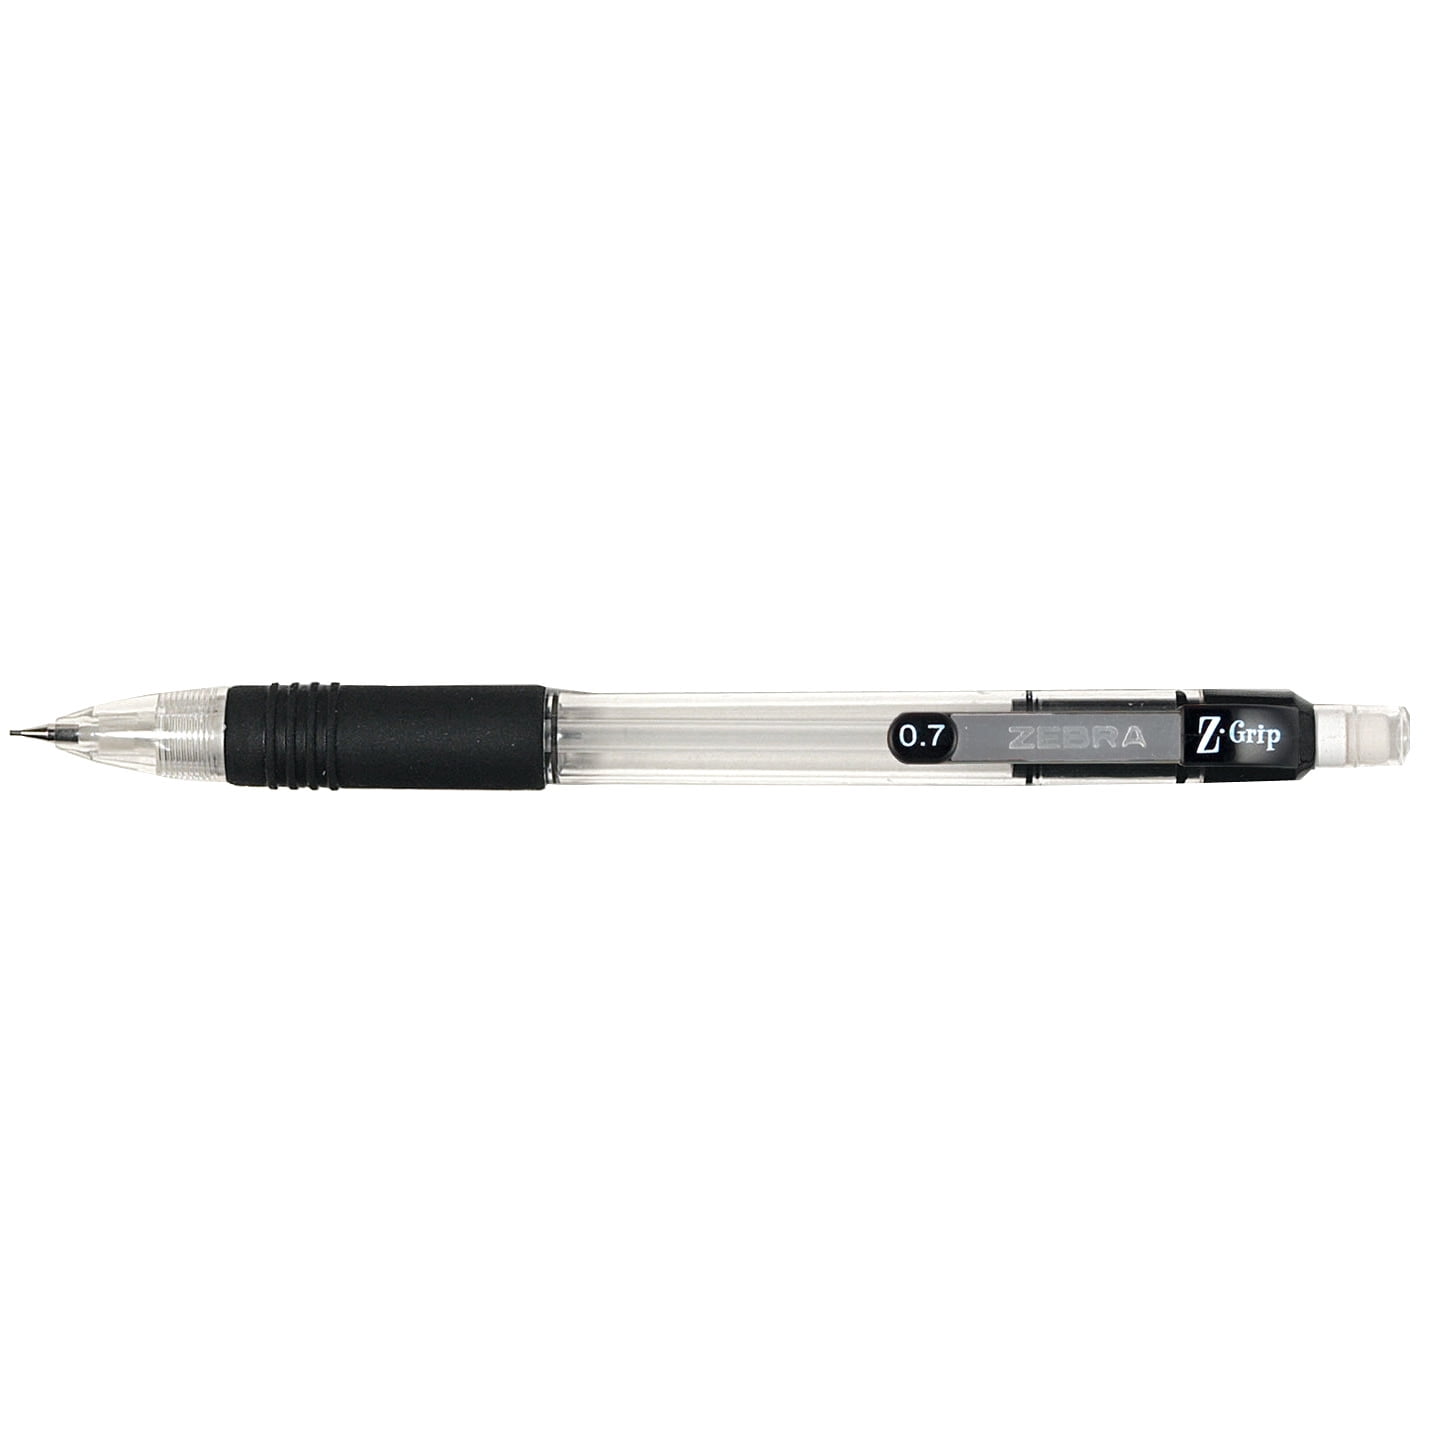 24 Pack New Zebra Z-Grip Mechanical Pencil 0.7mm Point Size Black Grip HB #2 Graphite 